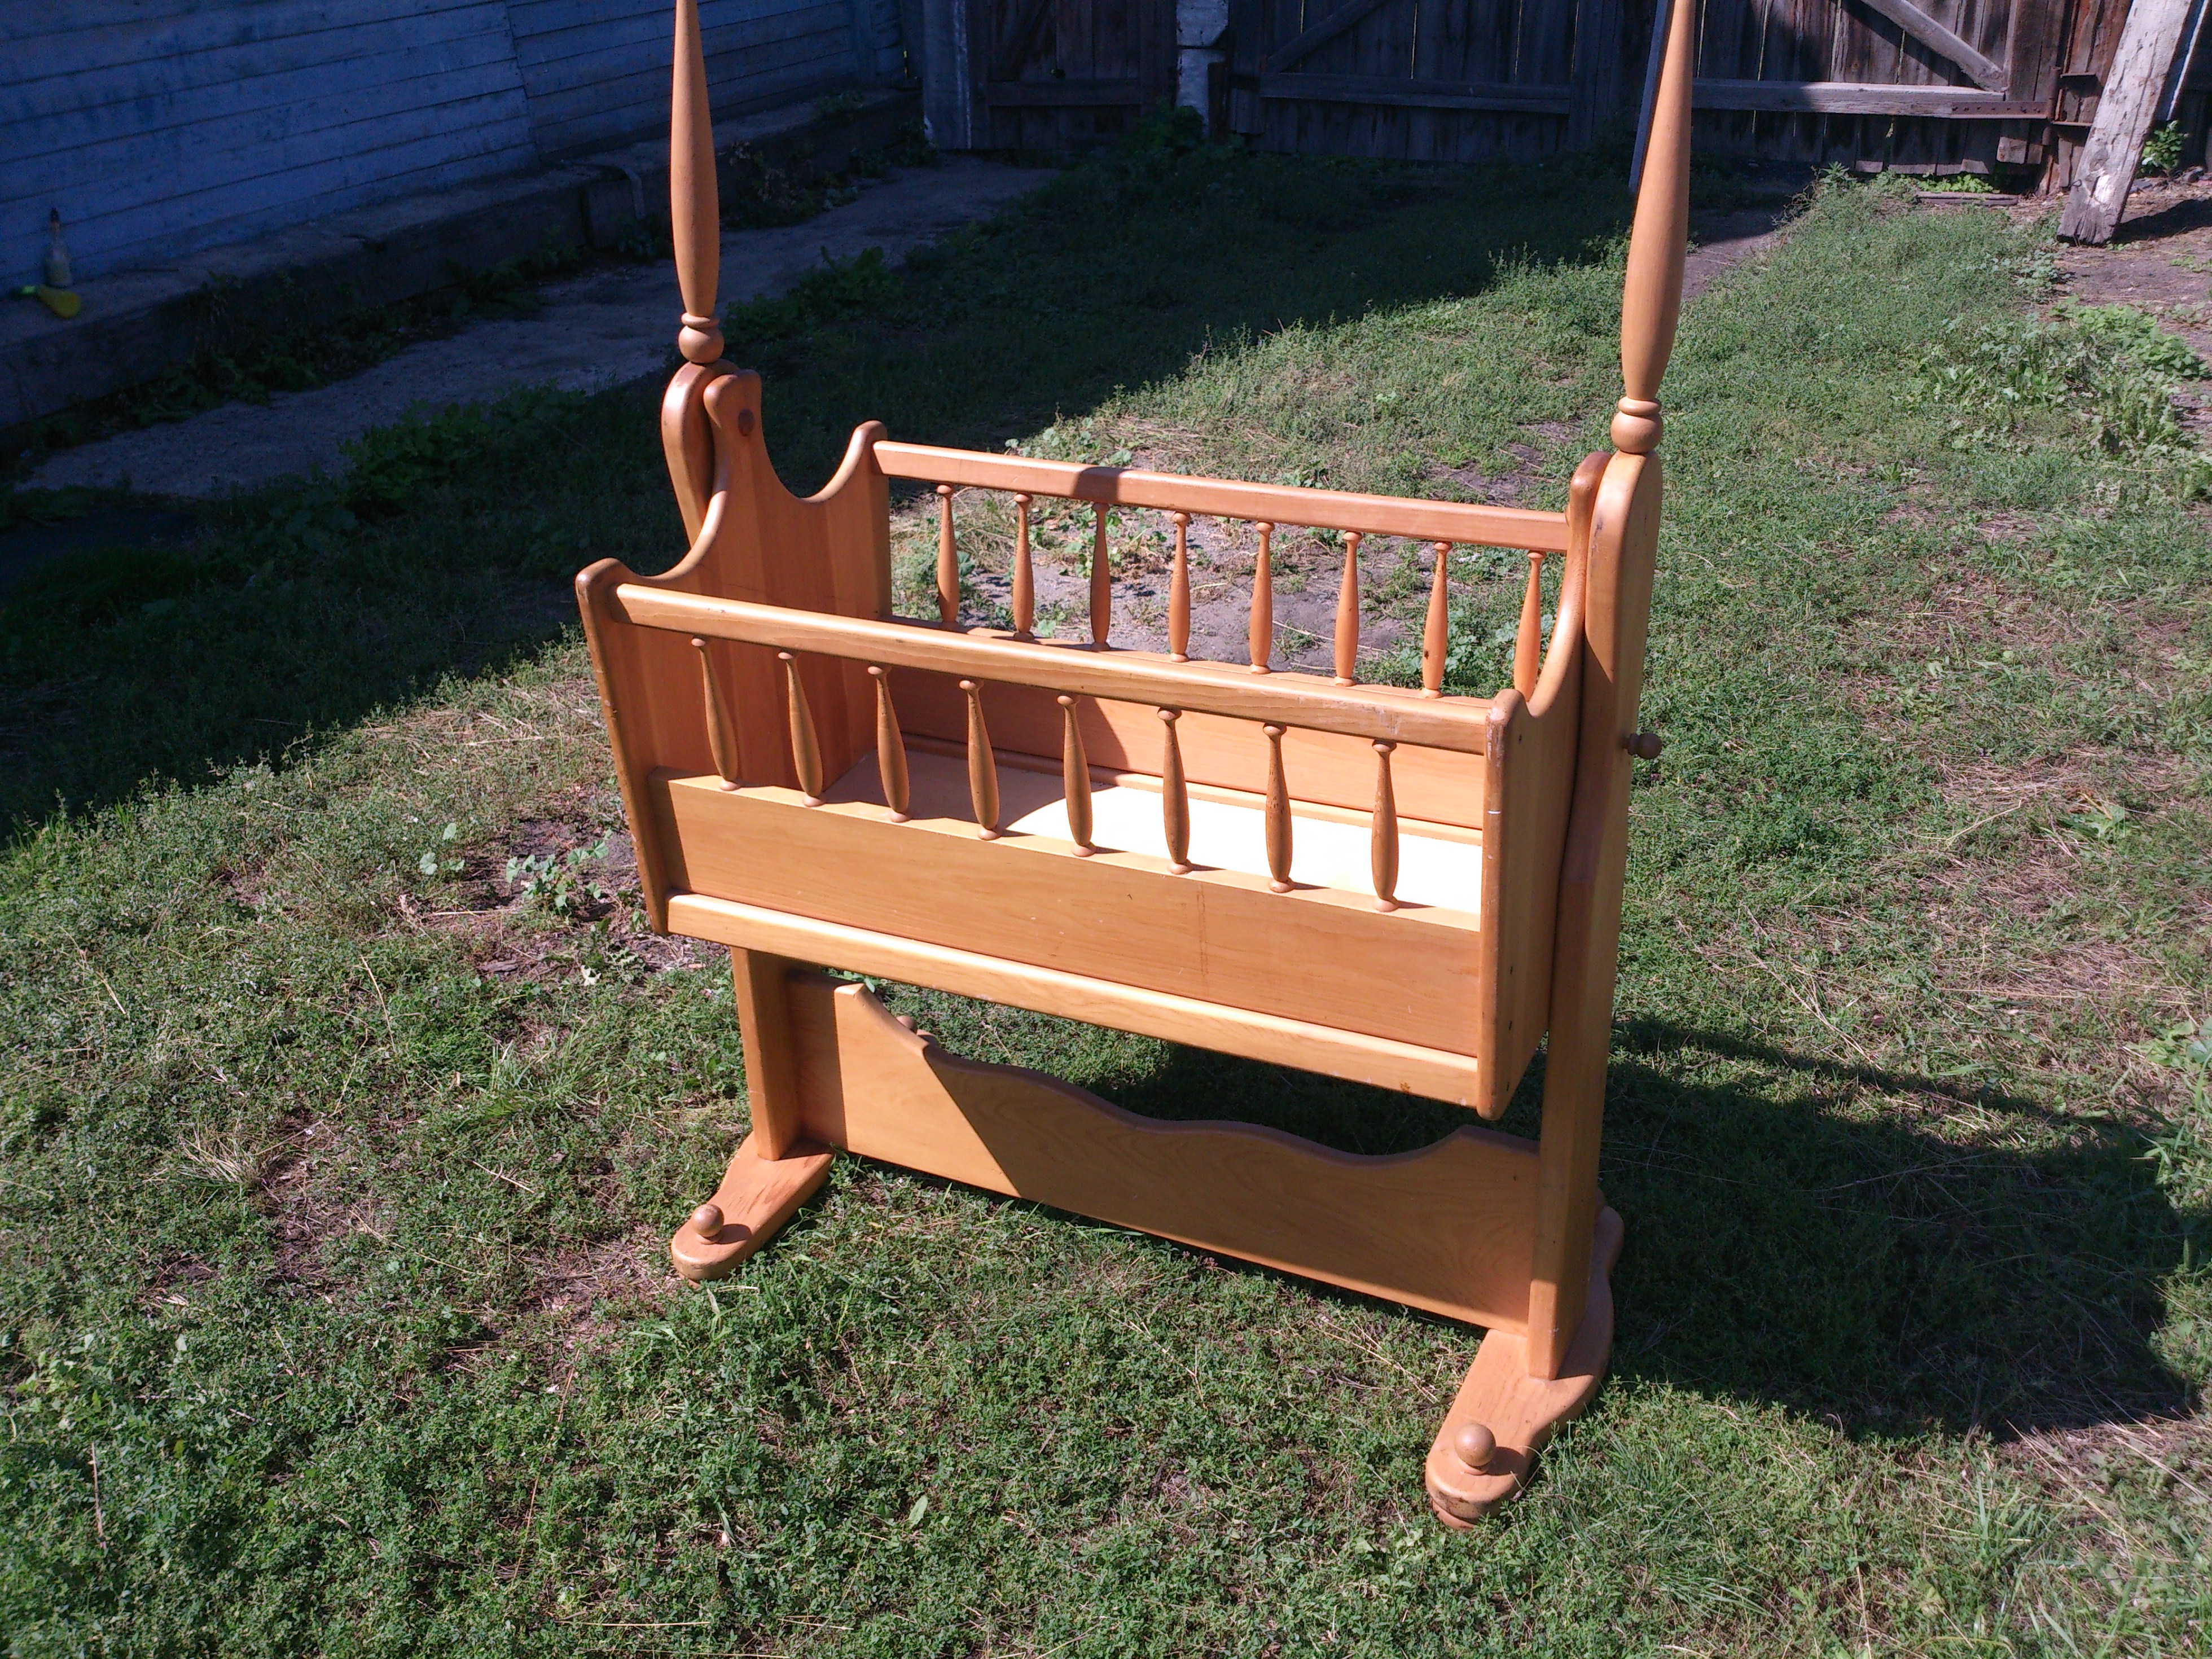 Small crib for a newborn baby